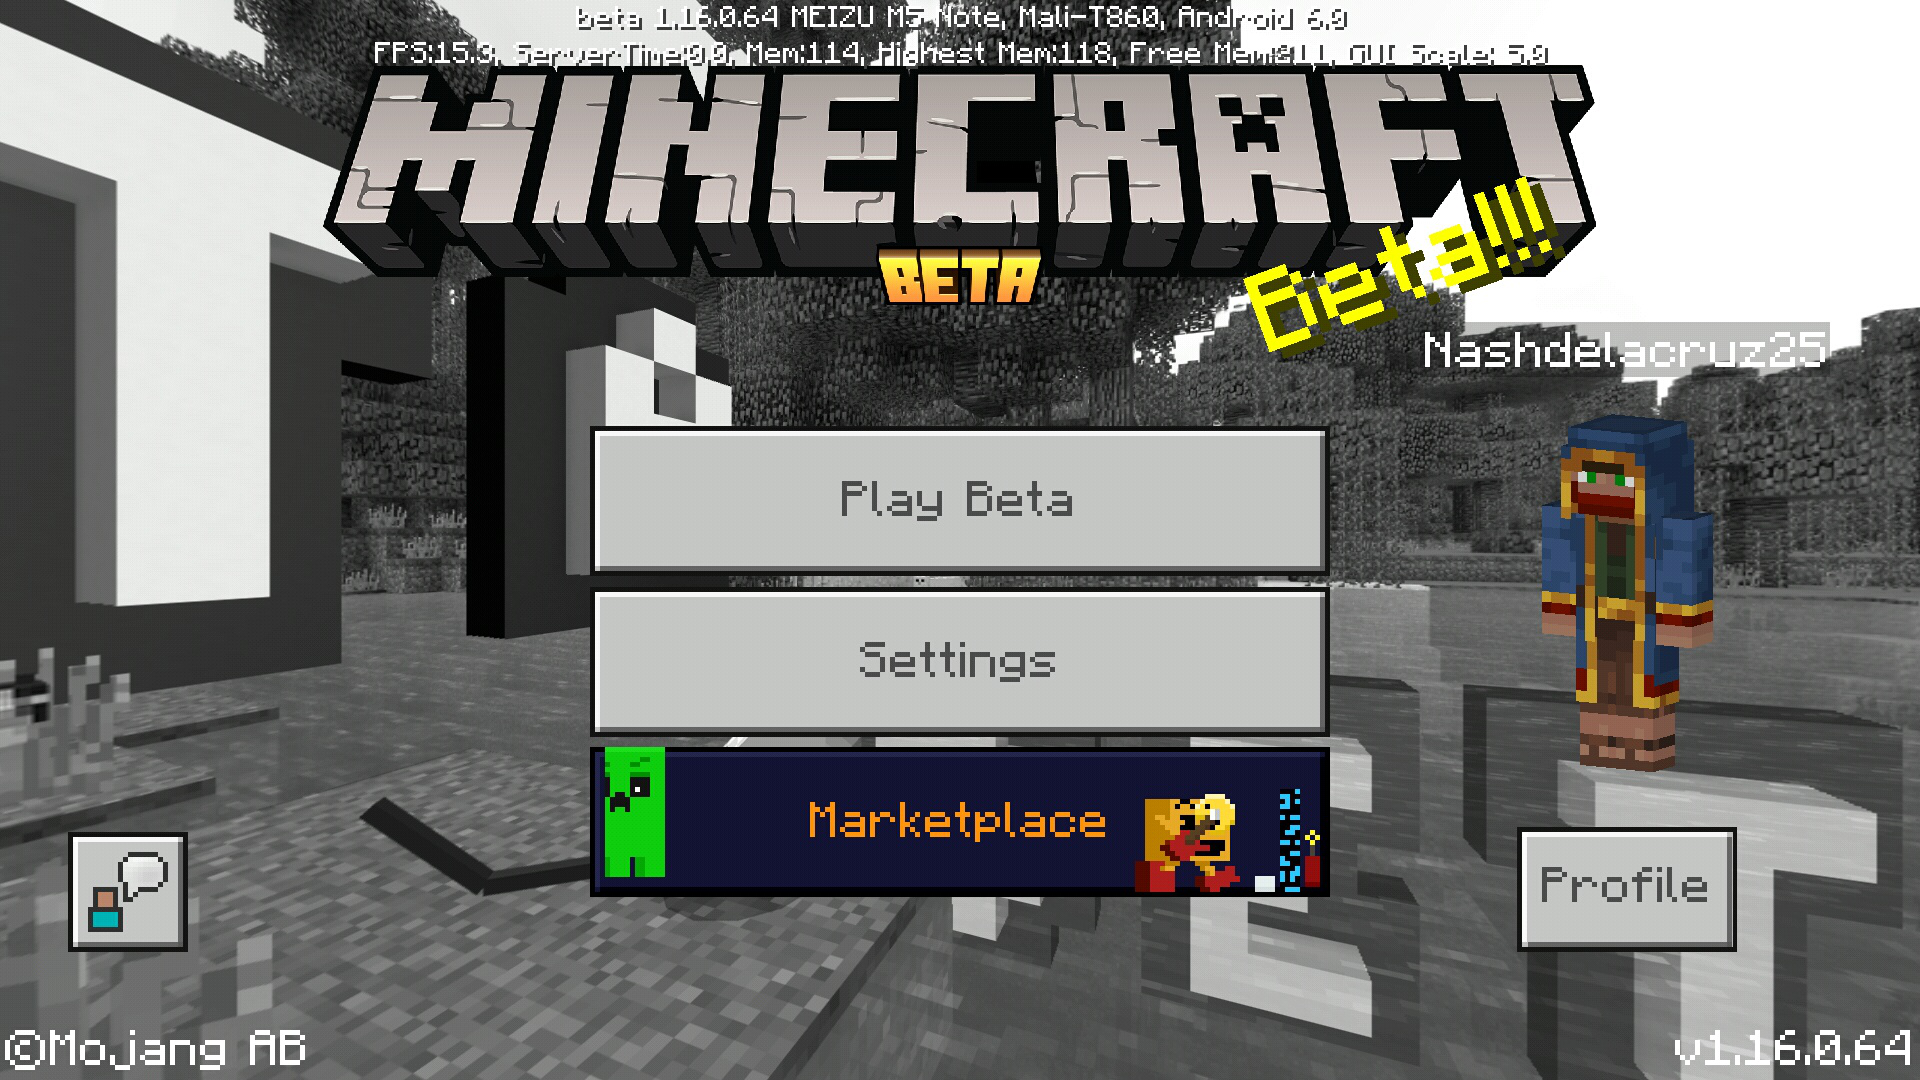 Baixar Minecraft PE 1.20.0.22 Beta para android